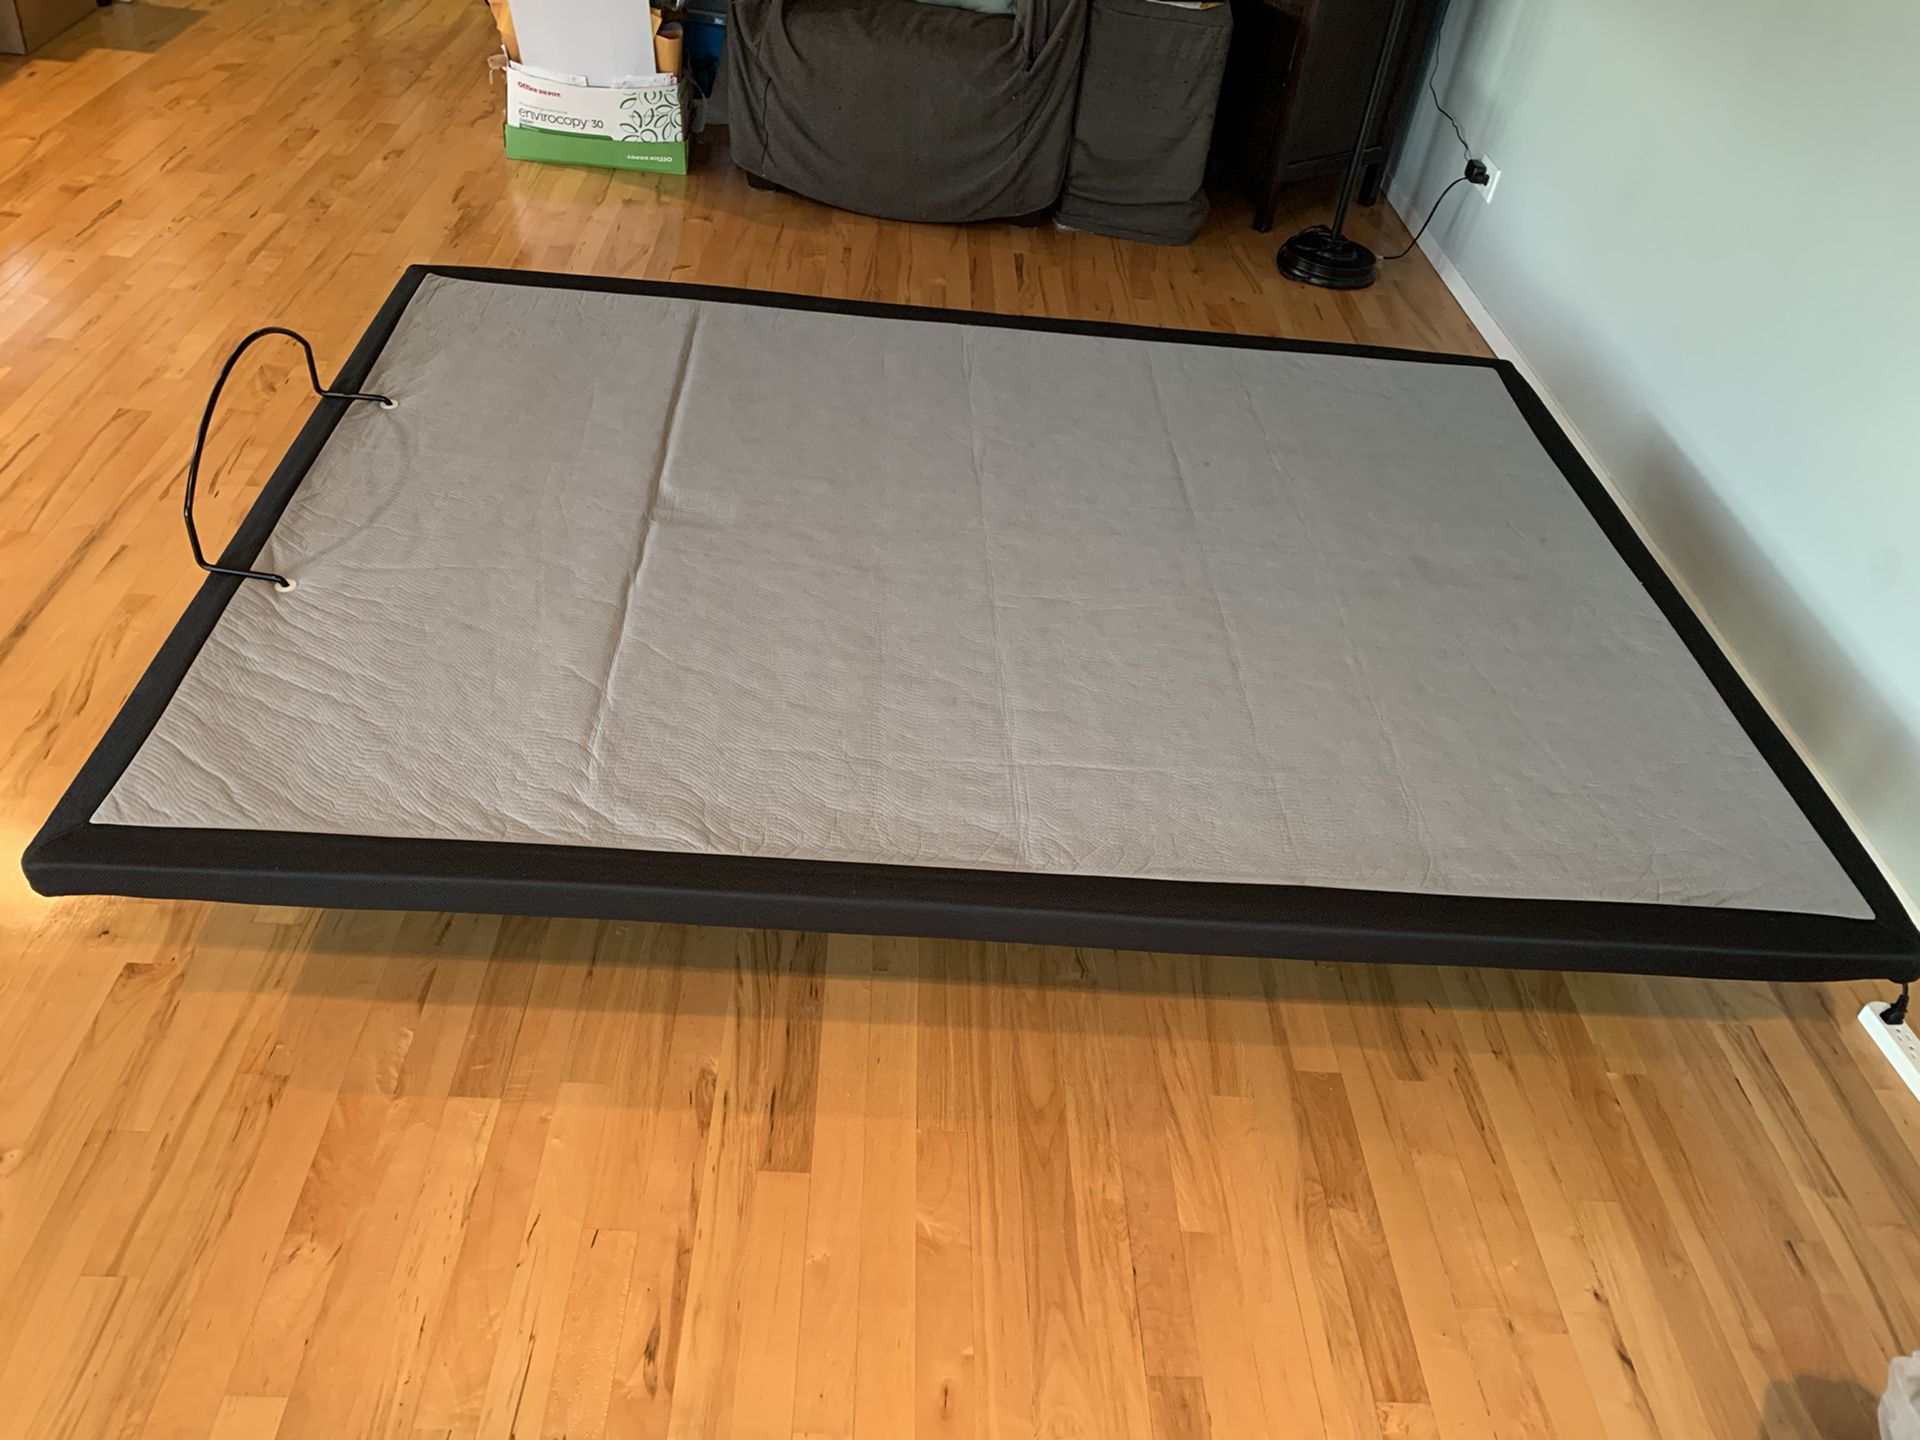 mattress firm adjustable base not working